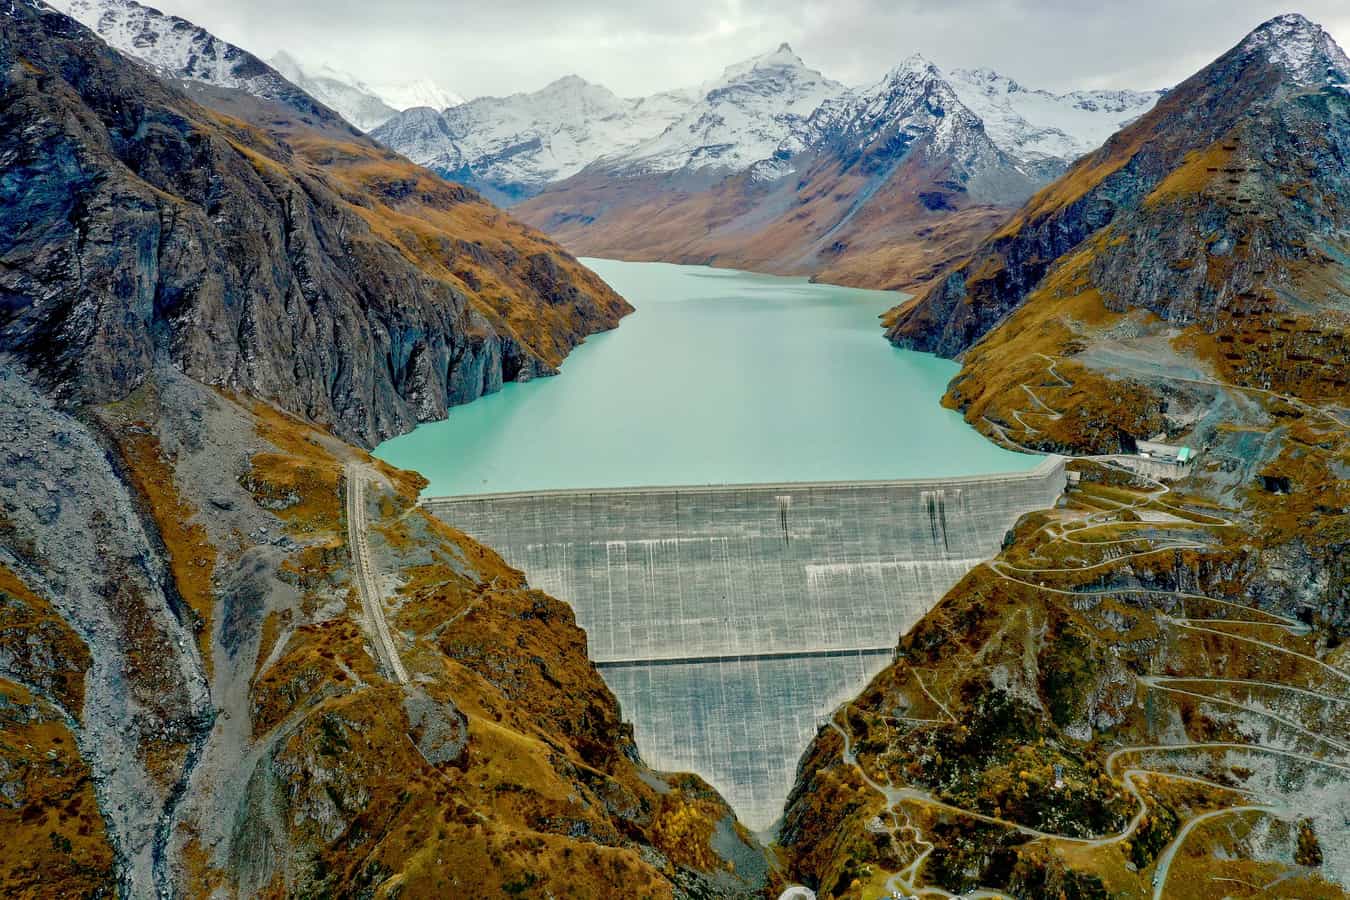 The Grande-Dixence dam in Valais, Switzerland.